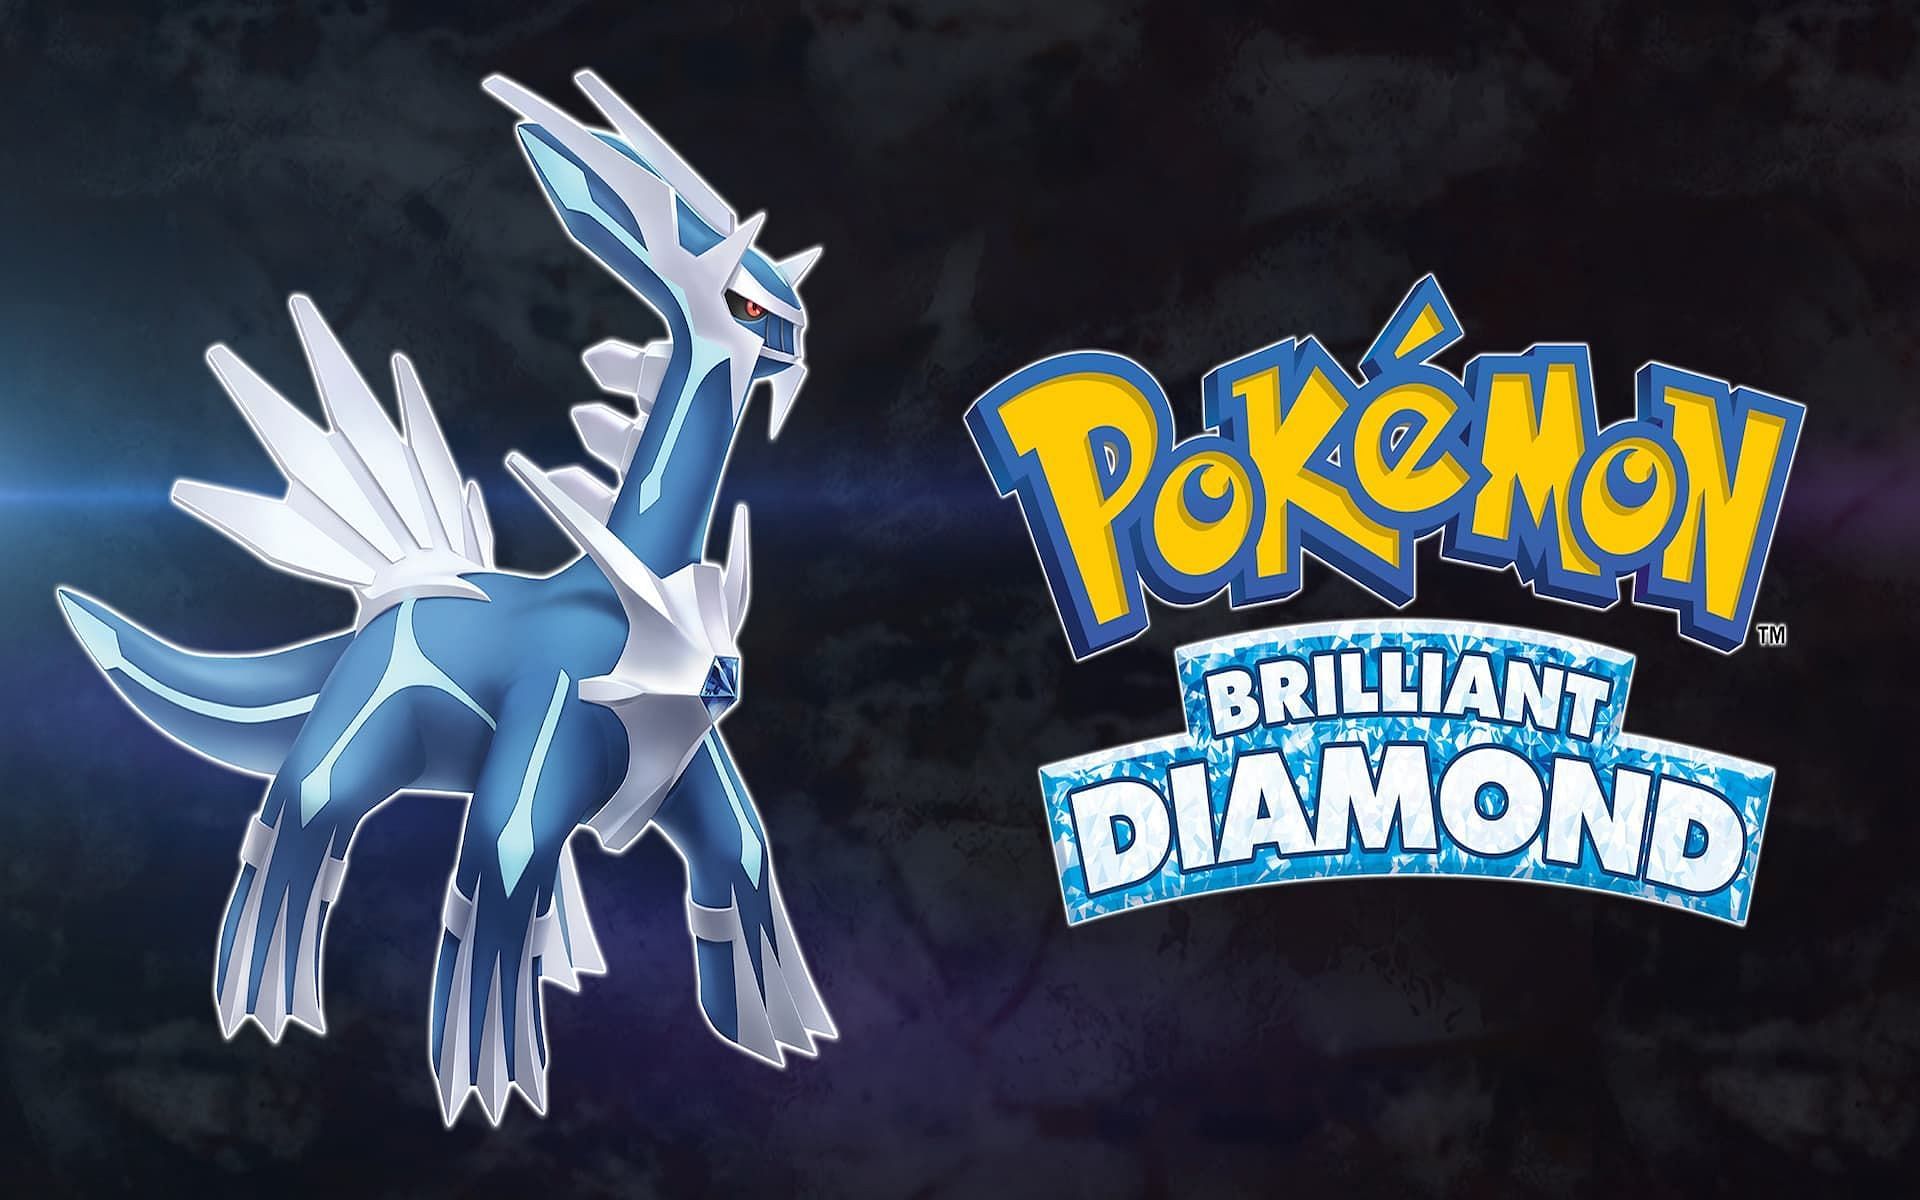 A promotional image for Pokemon Brilliant Diamond. (Image via ILCA)